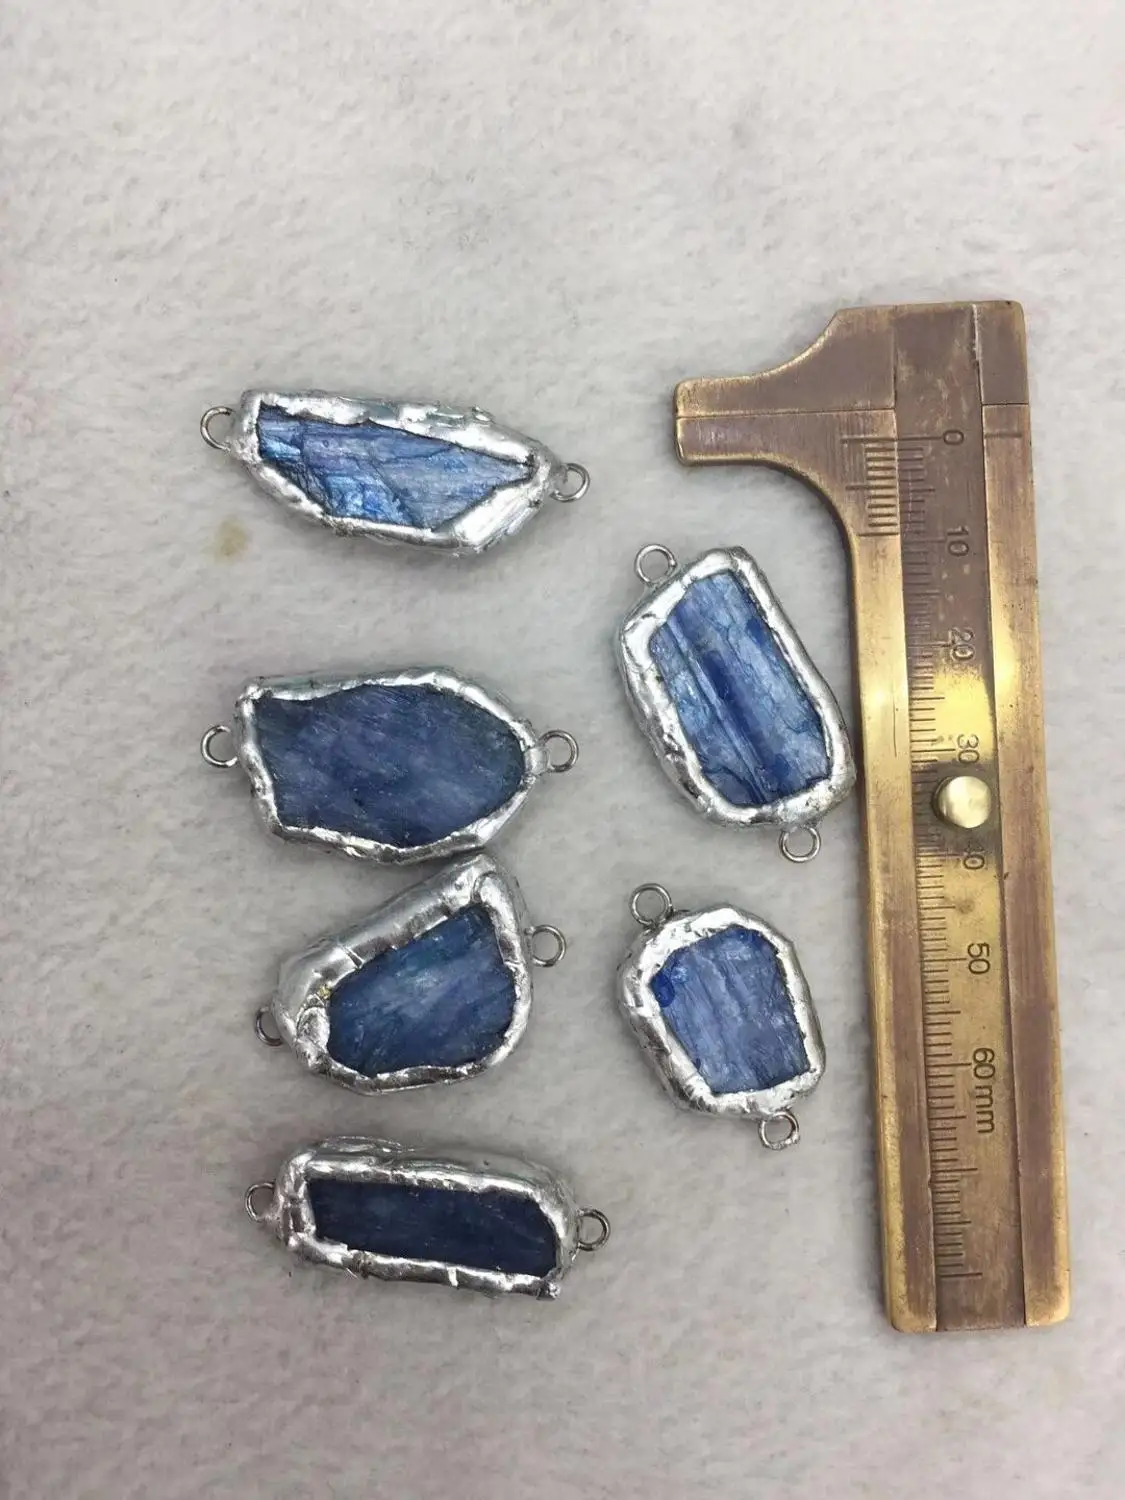 

Cingesto New arrival blue druzy semi precious necklace pendant, 15pcs longer plate for women jewelery design